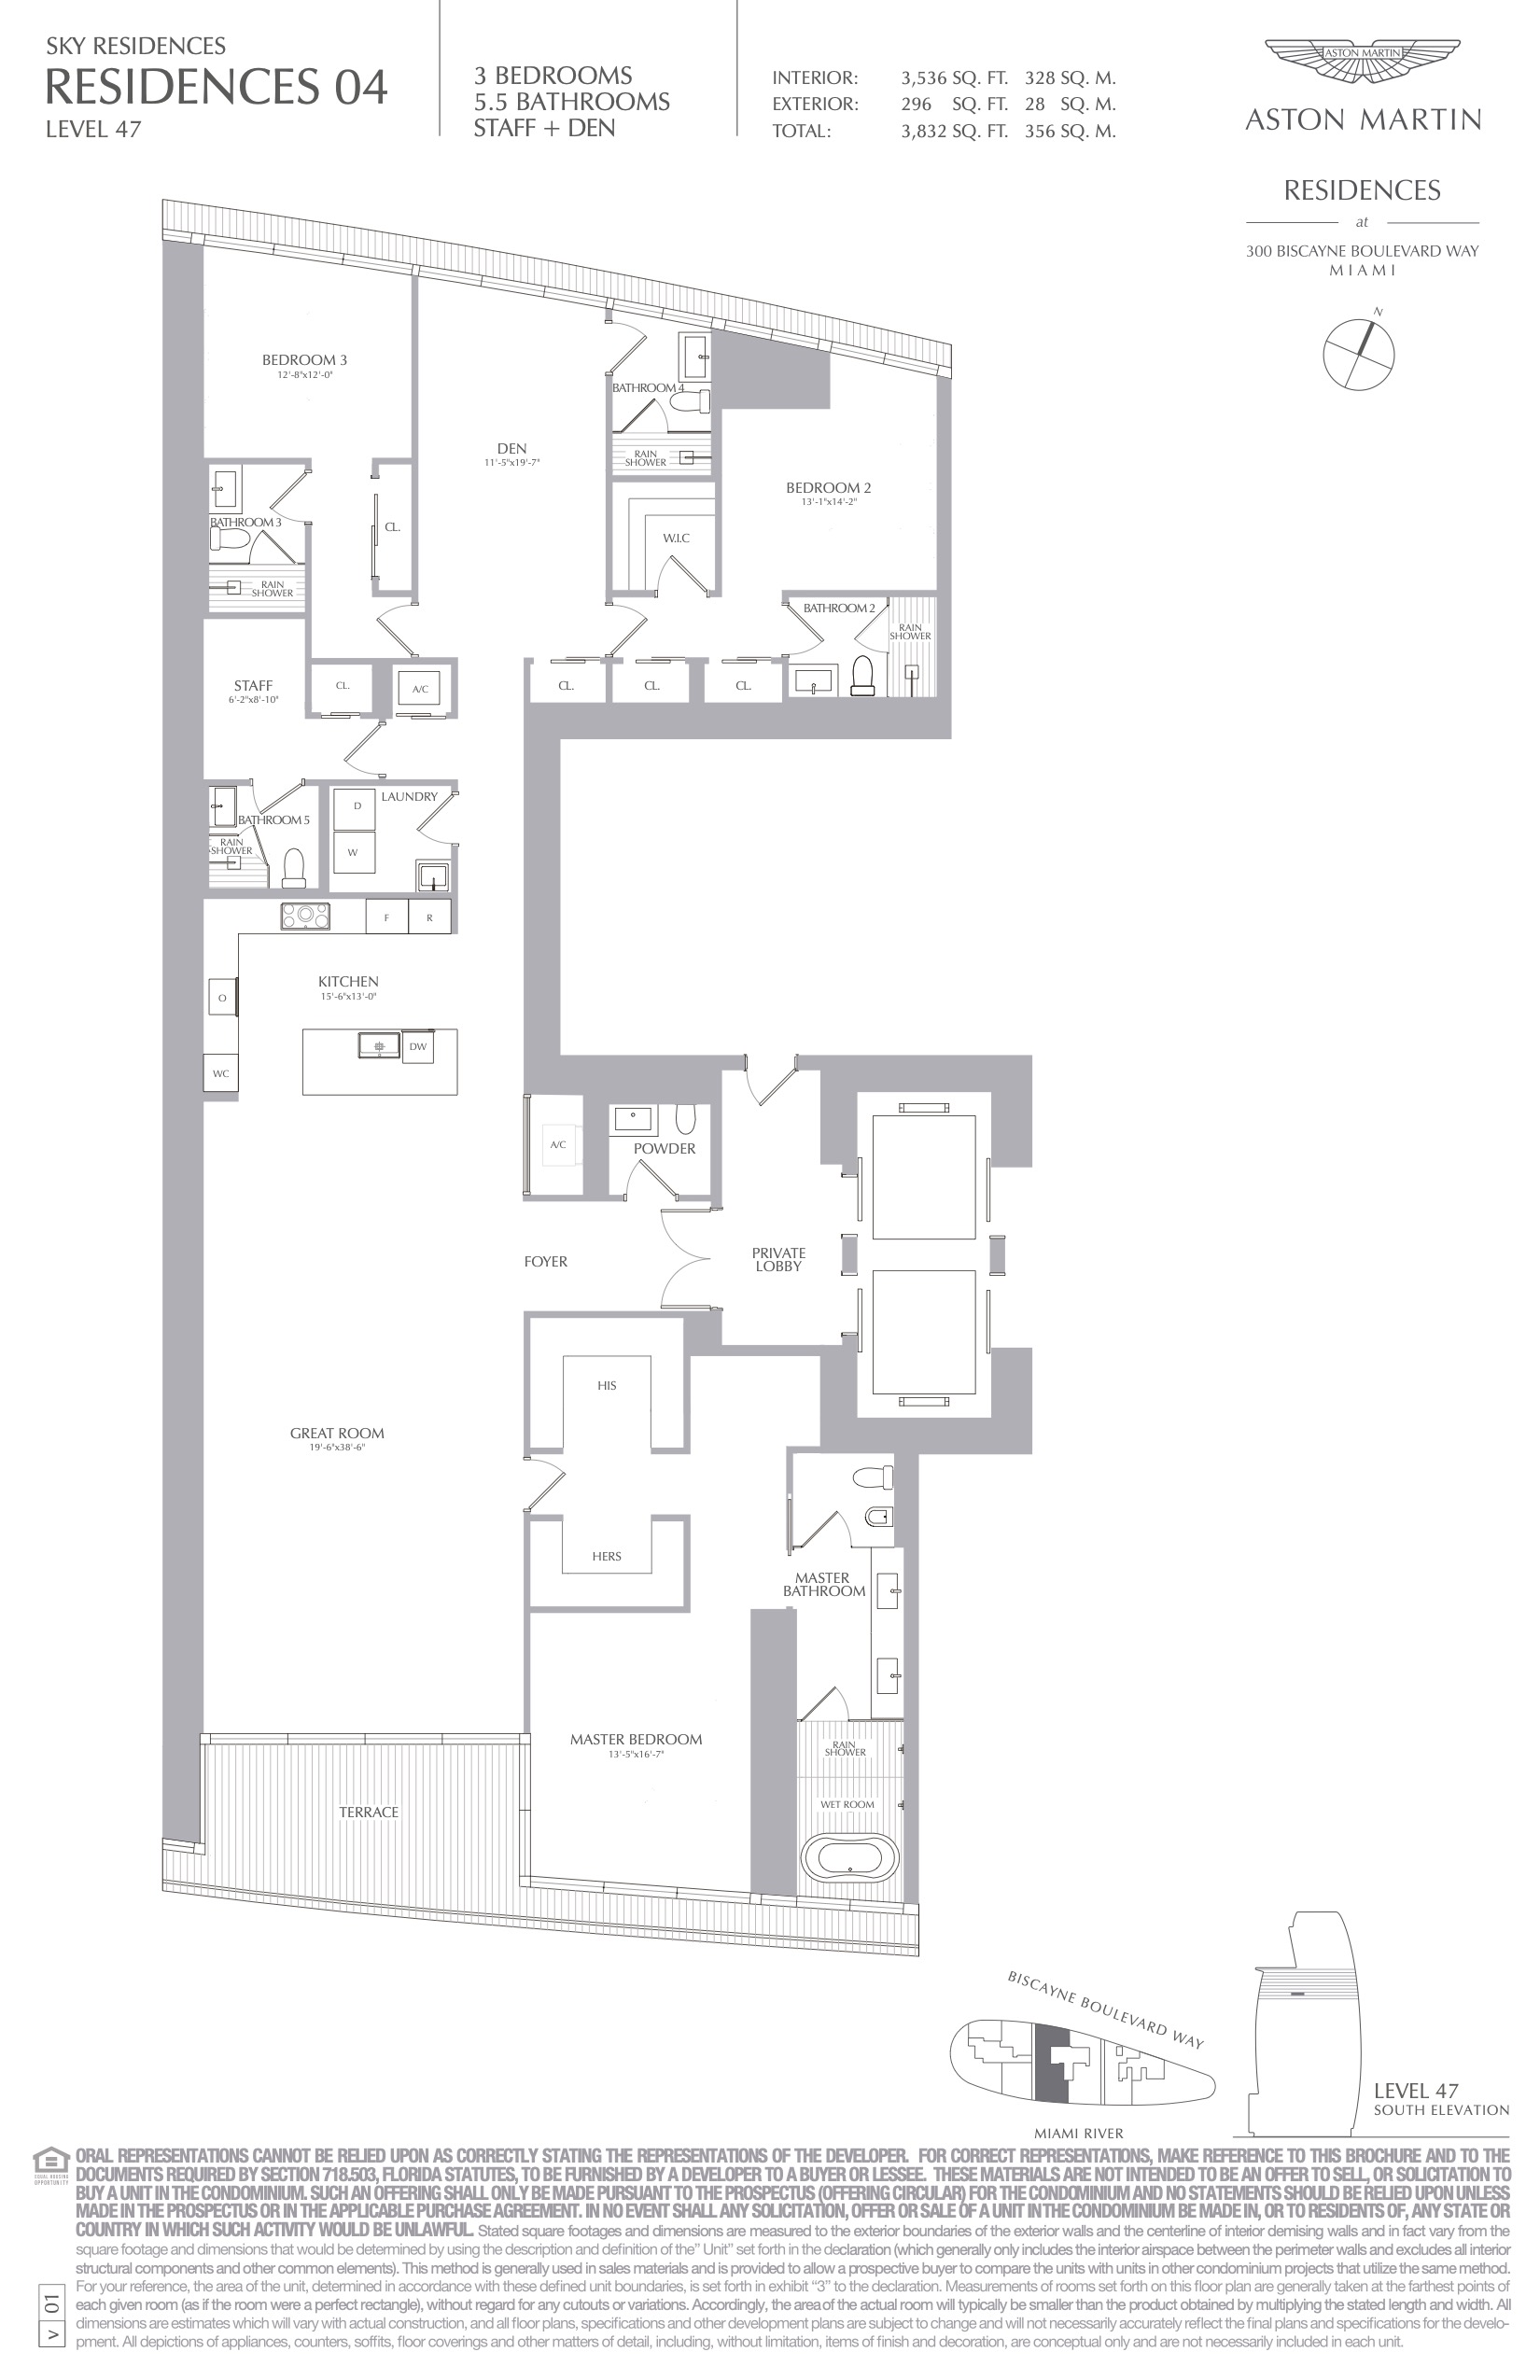 Residence 04 - Level 47